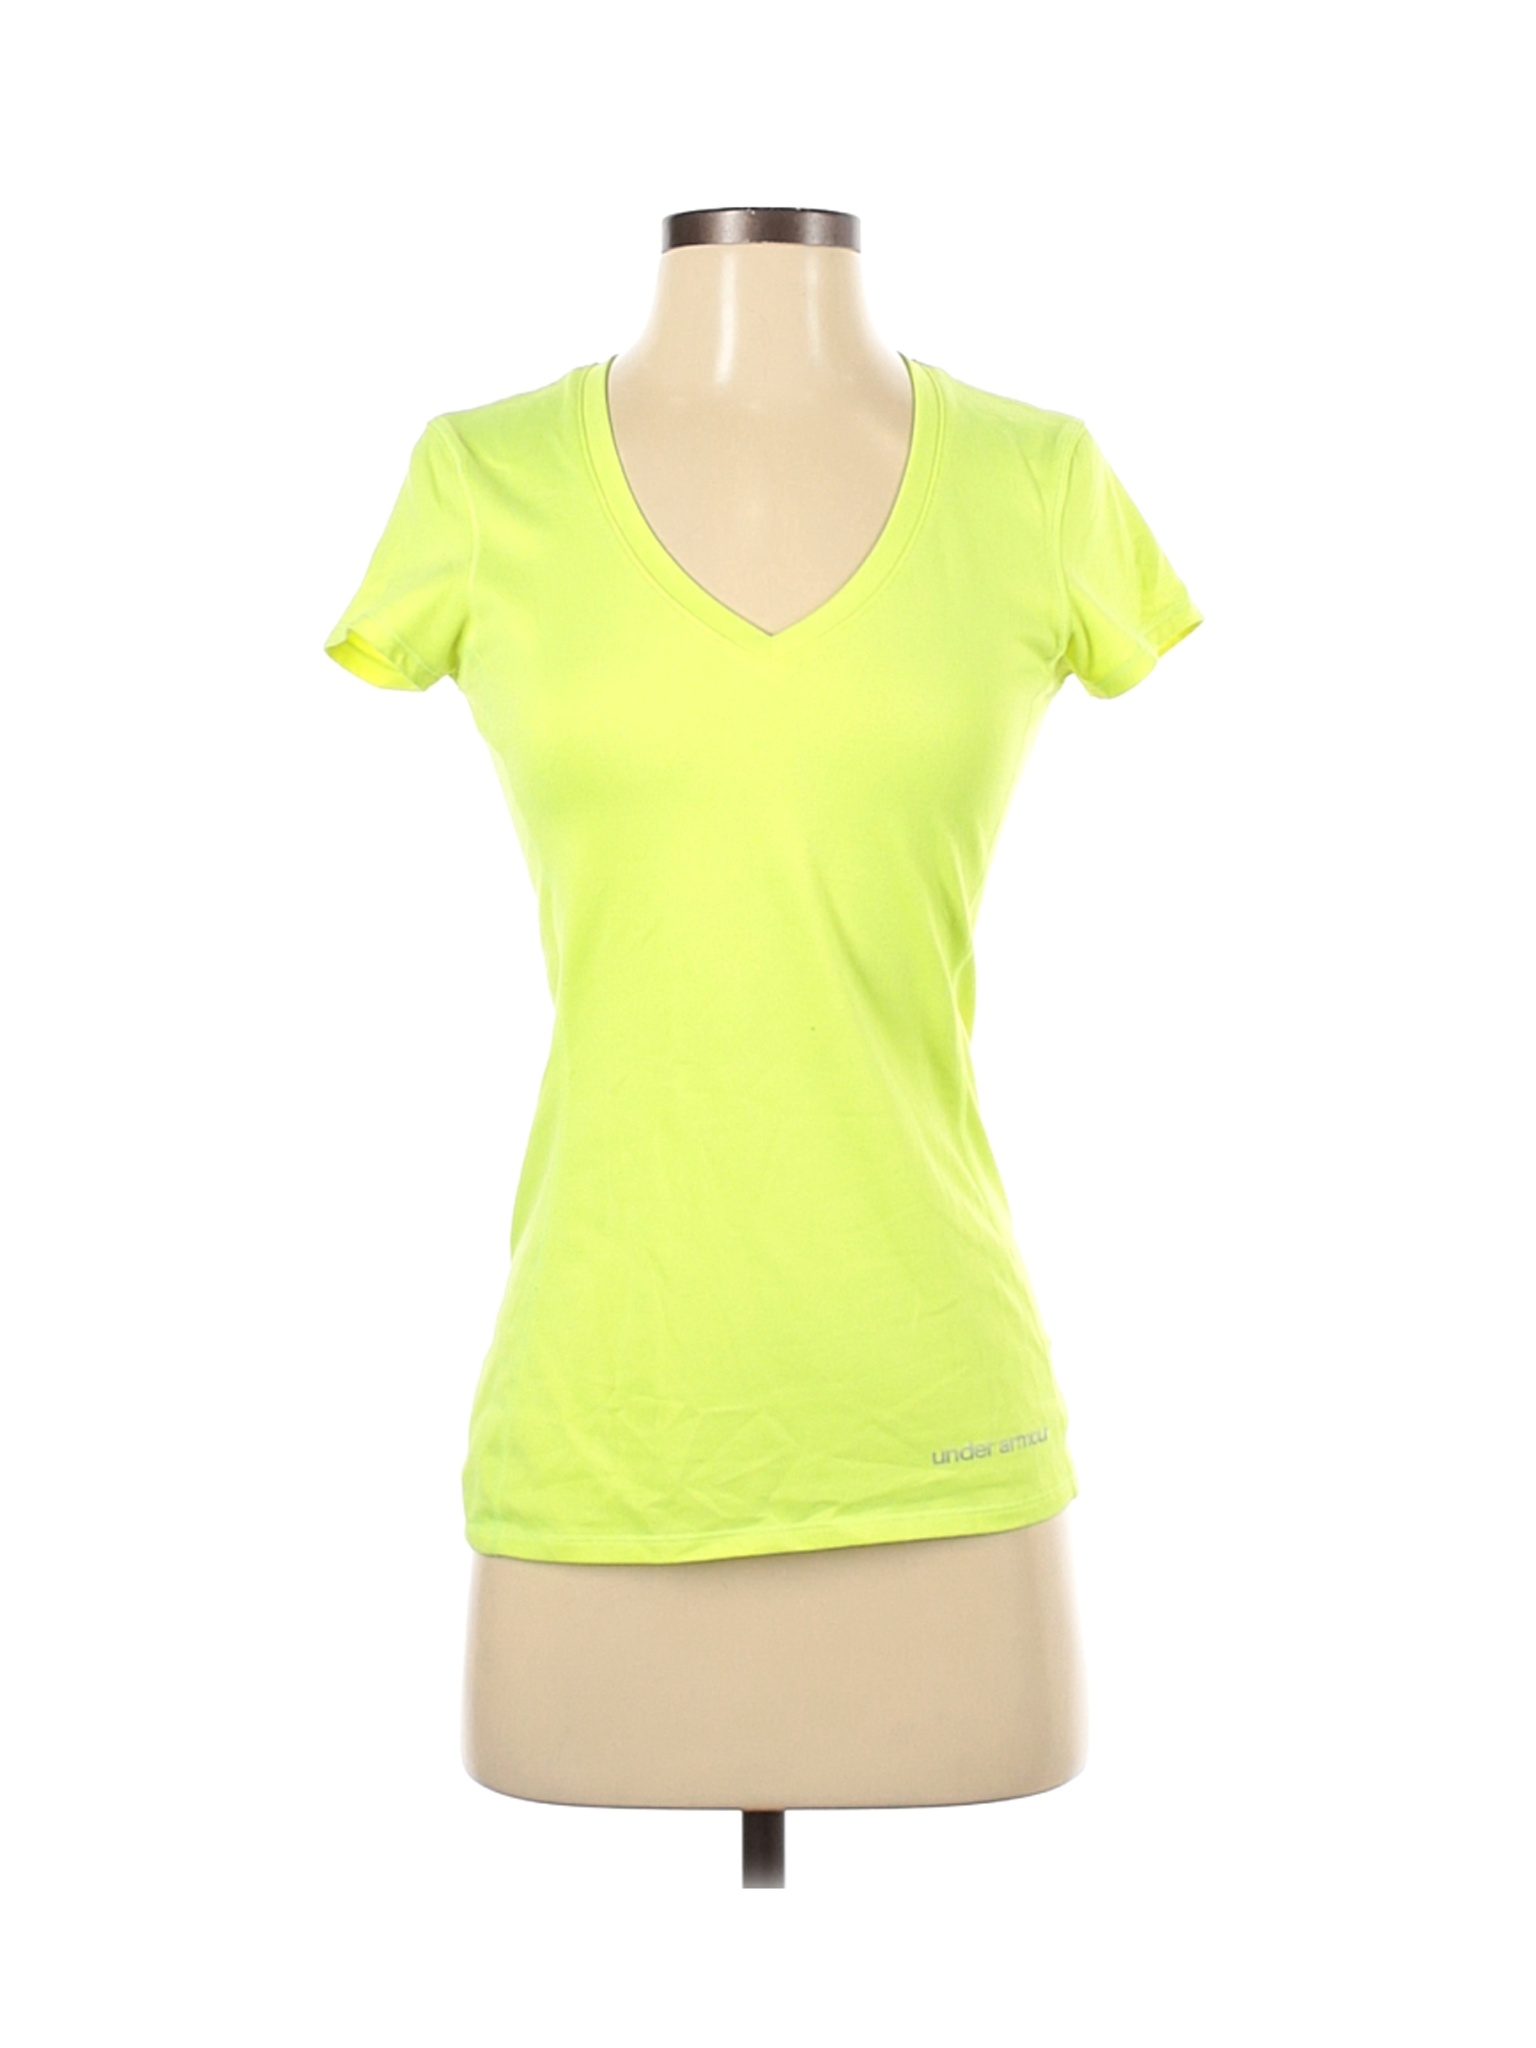 Under Armour Women Yellow Active T-Shirt S | eBay